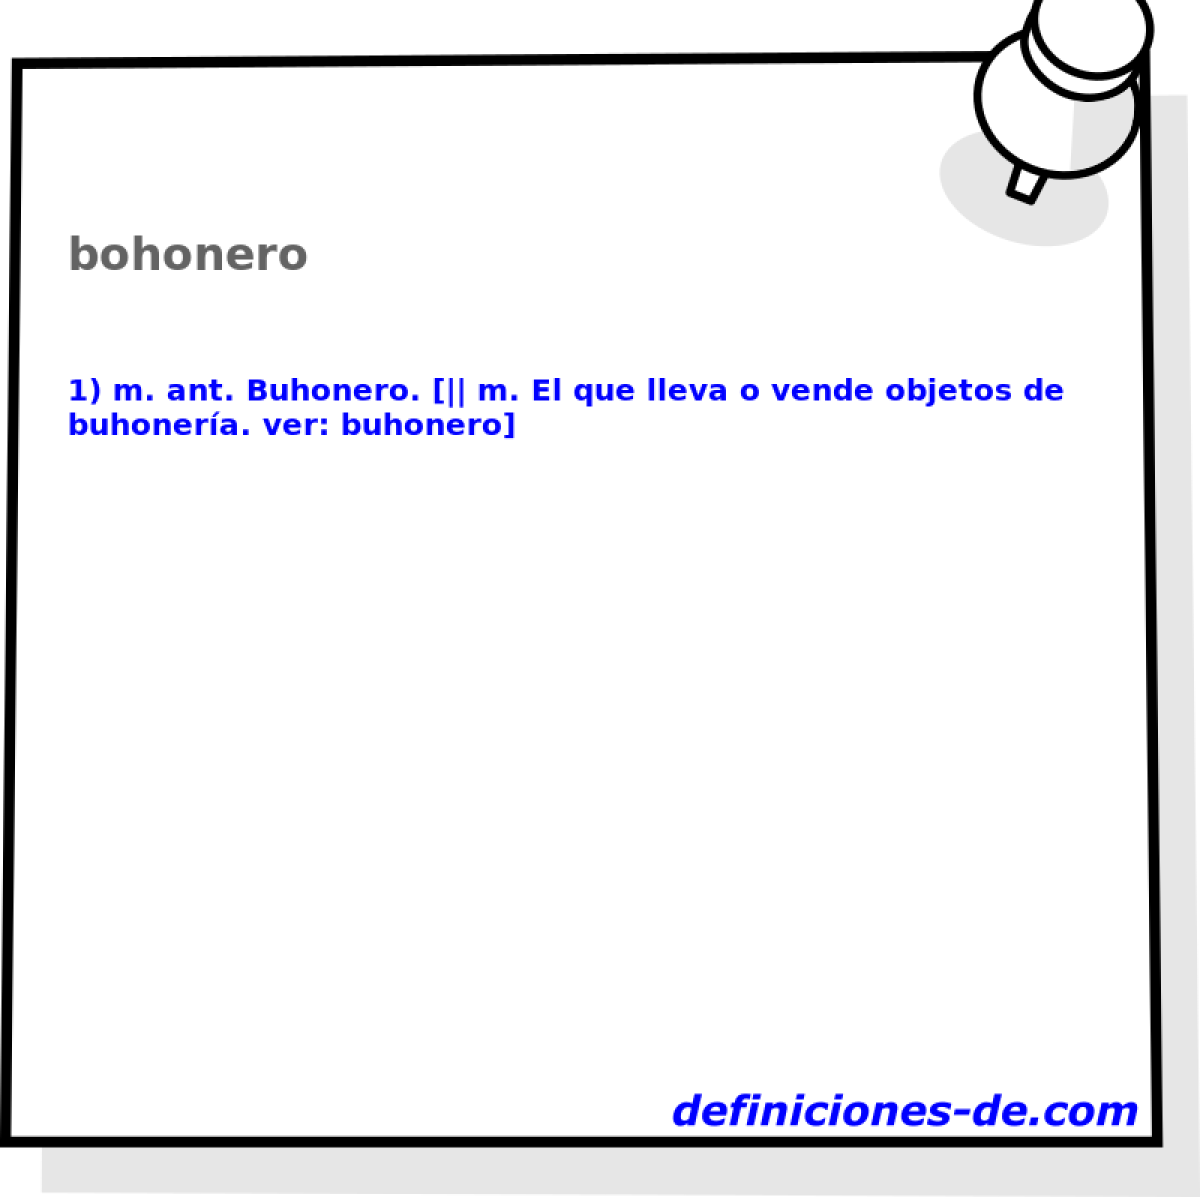 bohonero 